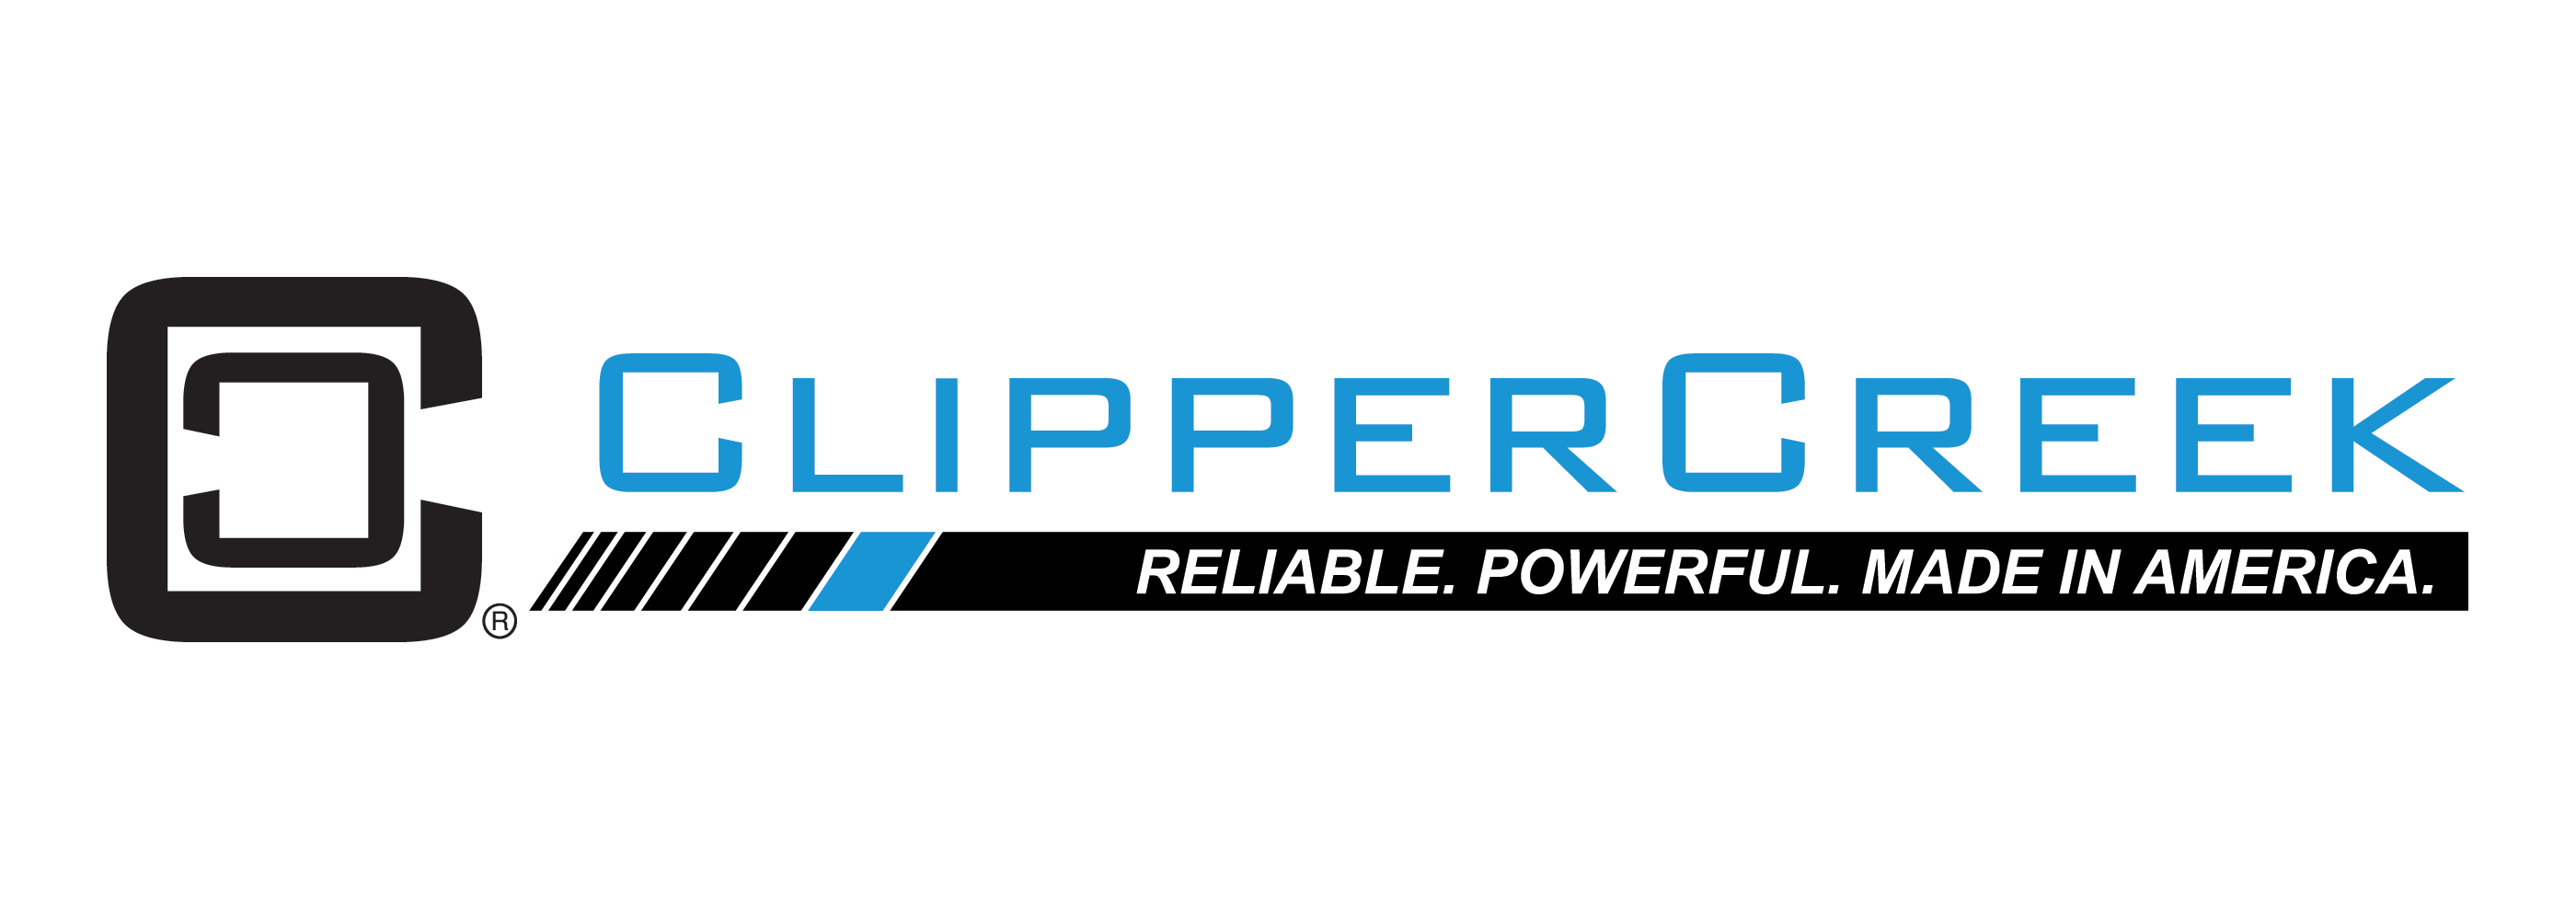 Clipper Creek logo probid energy